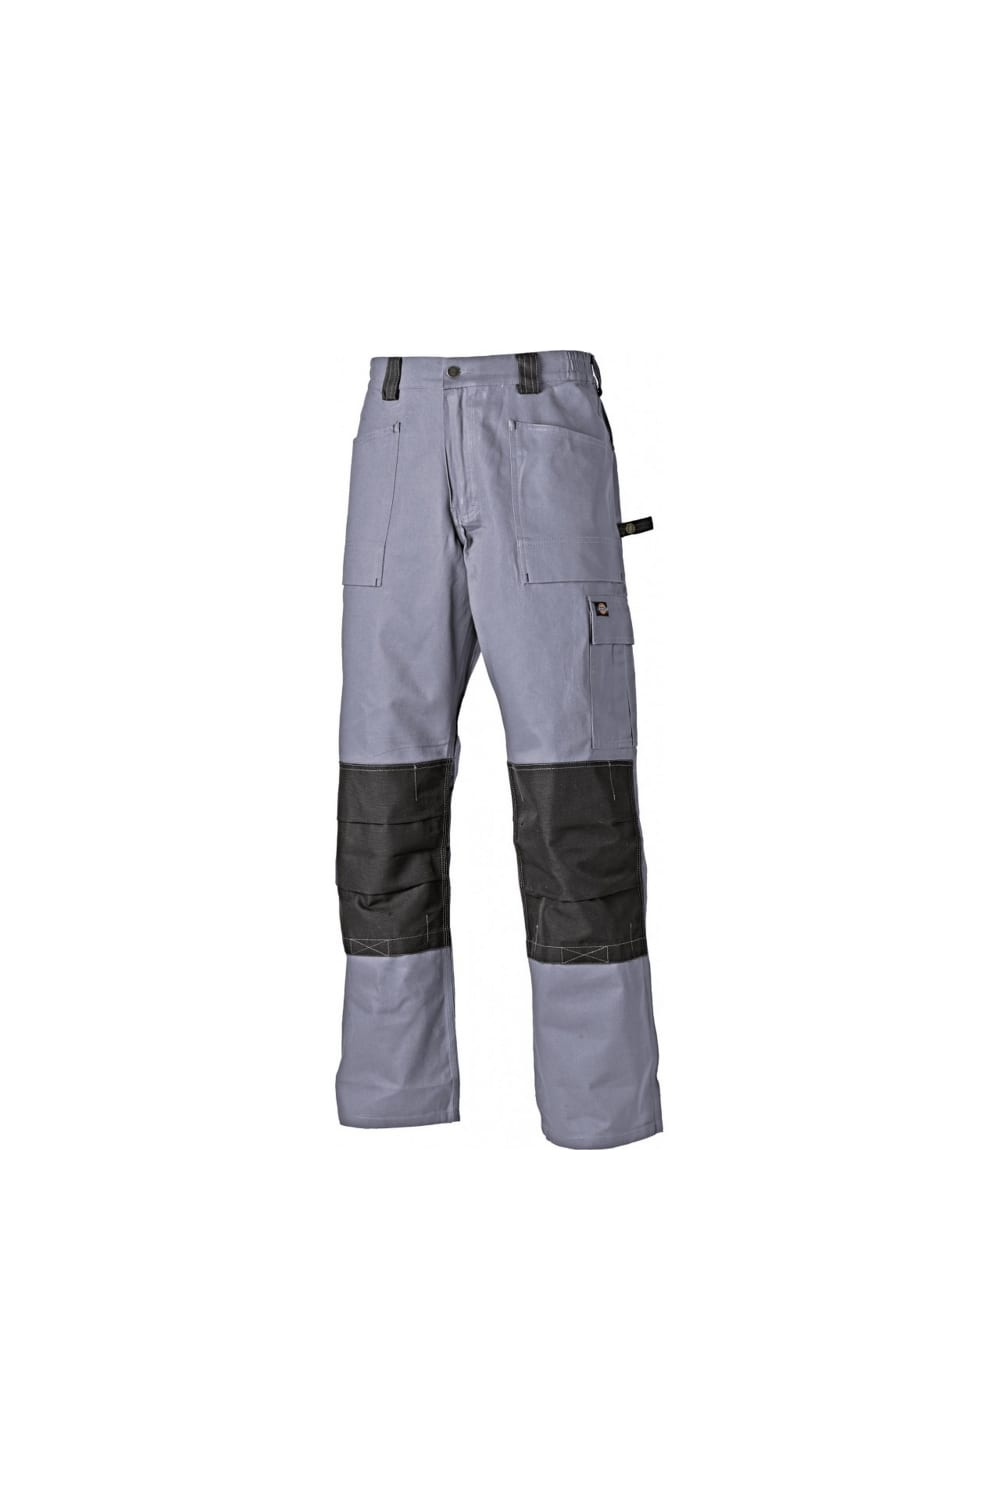 Dickies Mens Grafted Duo-Tone Work Trousers / Workwear (Grey/ Black)